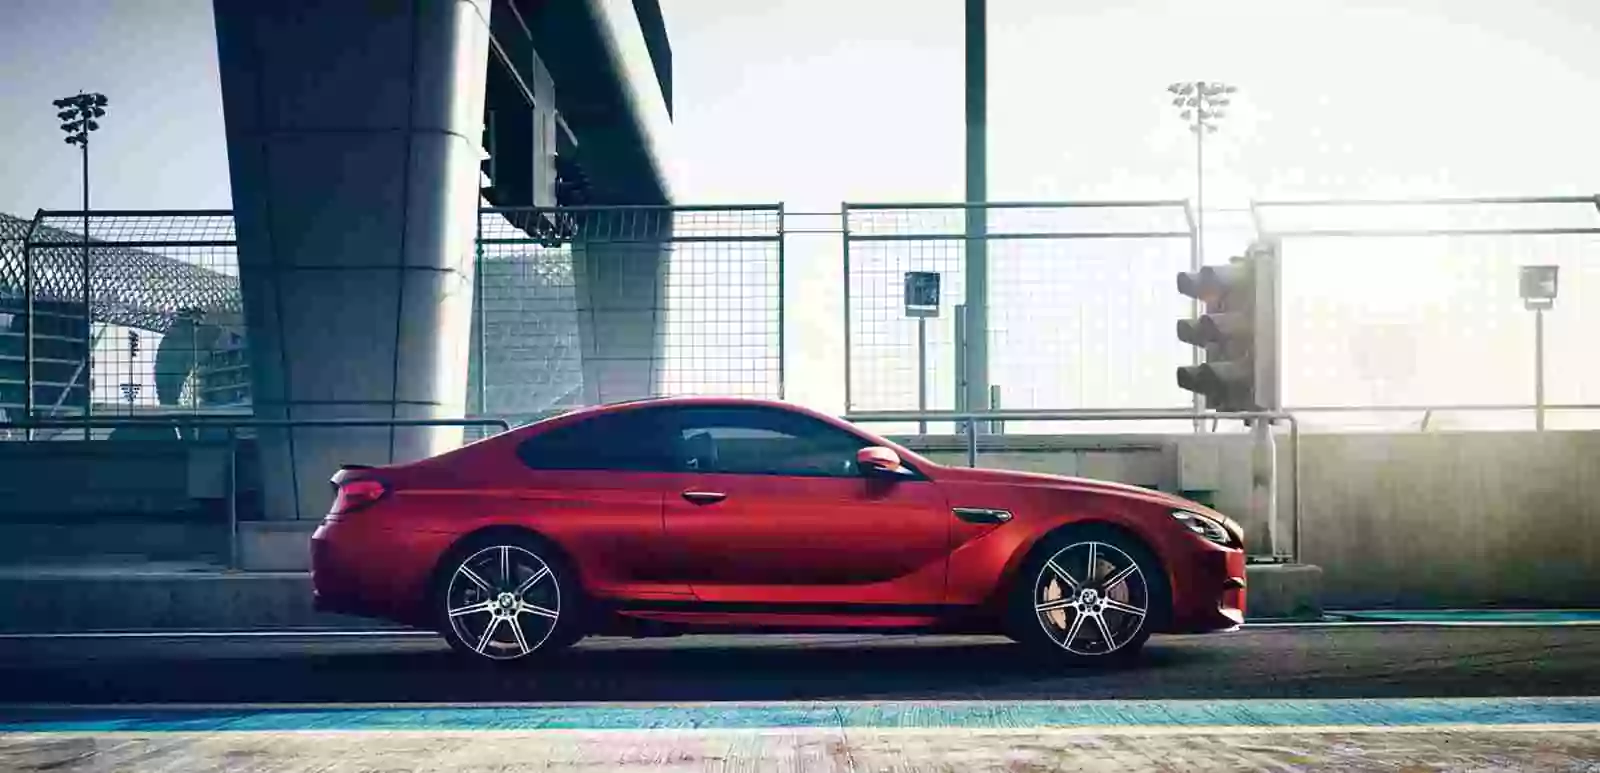 BMW M6 For Drive Dubai 